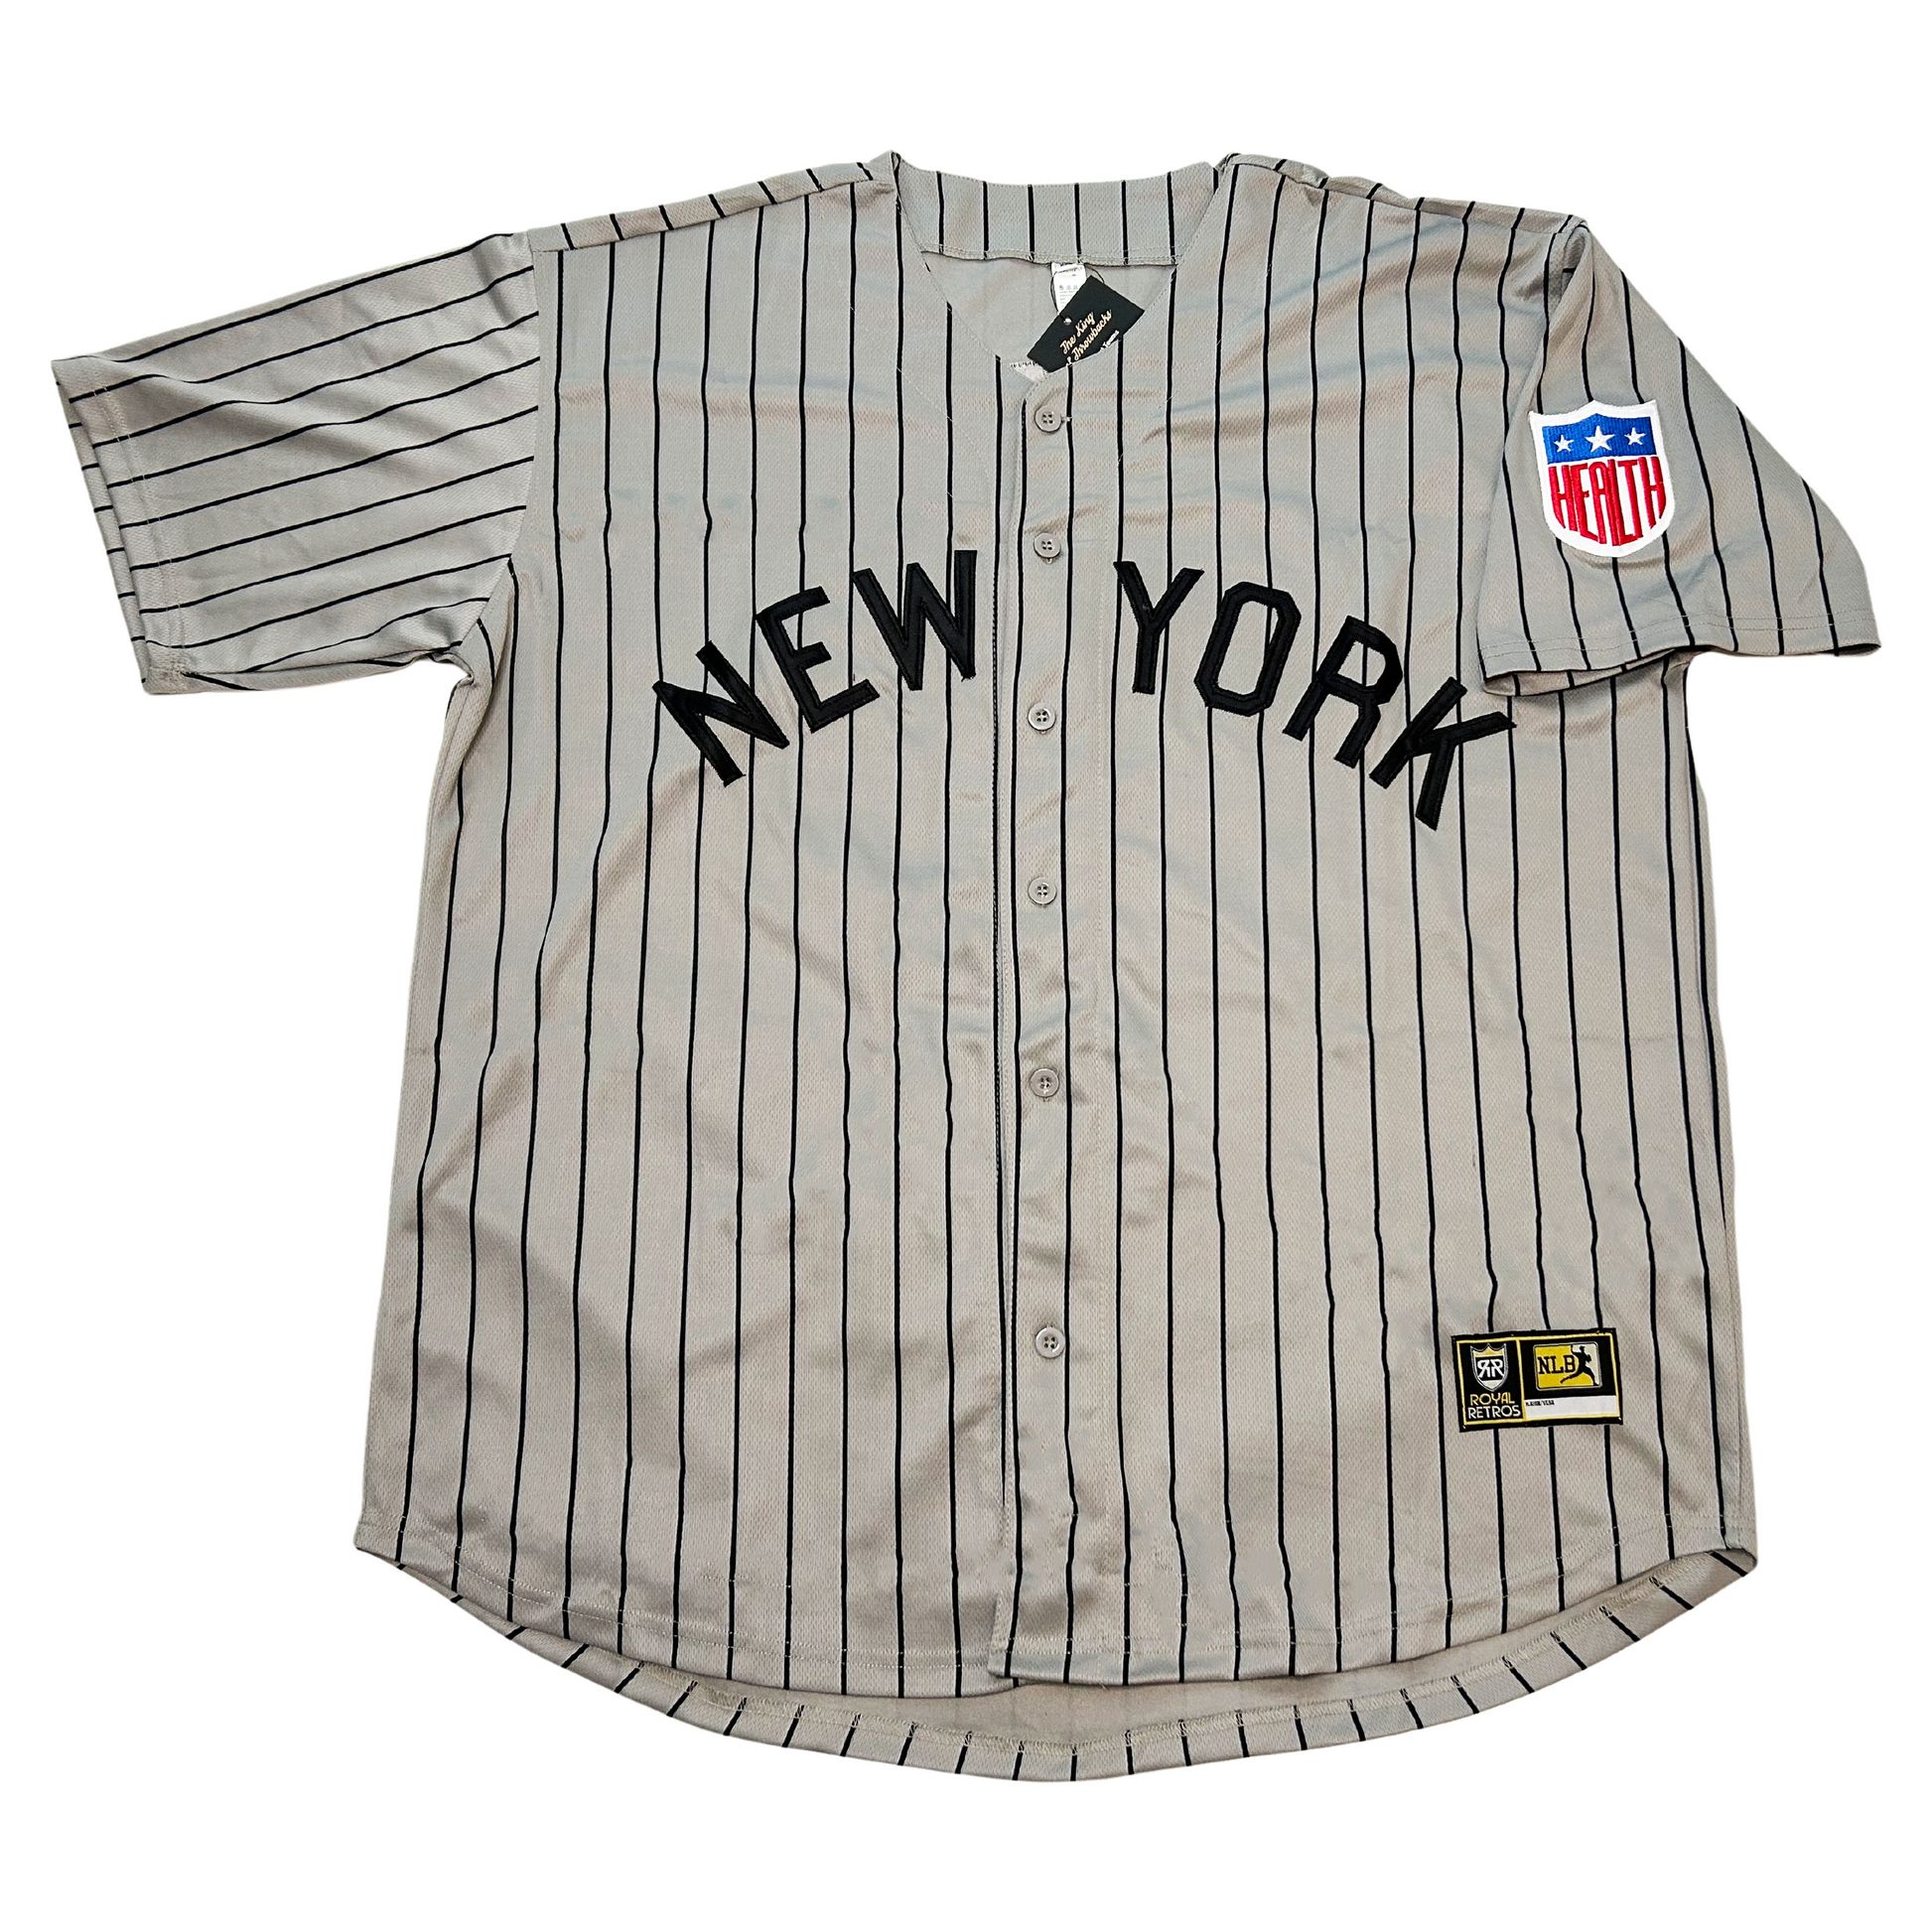 Noiz New York Baseball Jersey (Grey/Black)